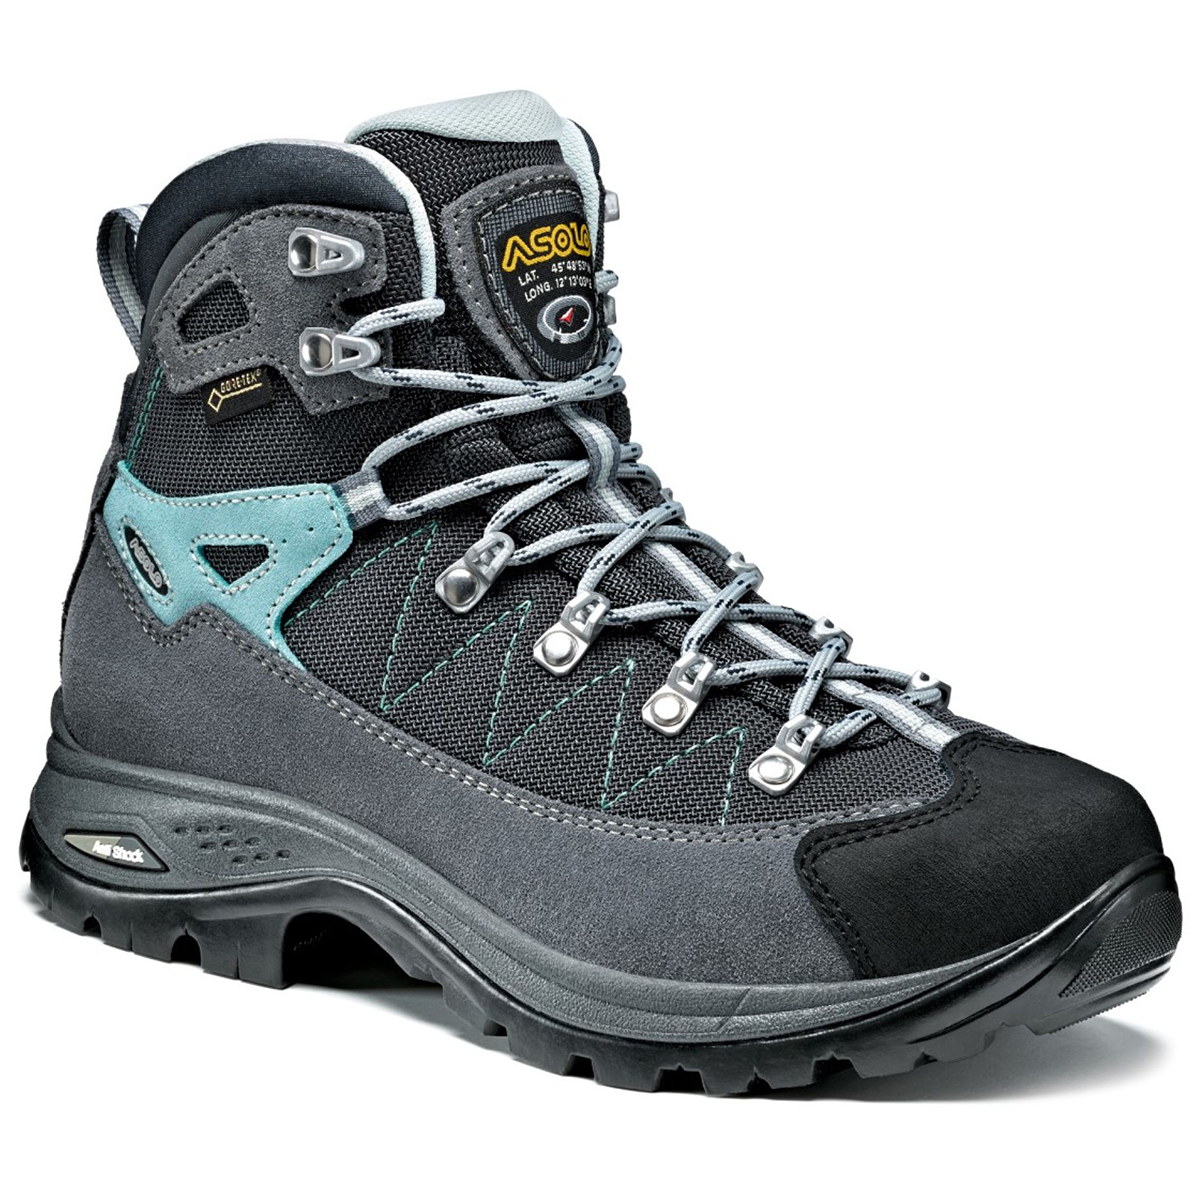 Asolo Women's Finder Gv Waterproof Hiking Boots - Size 7.5